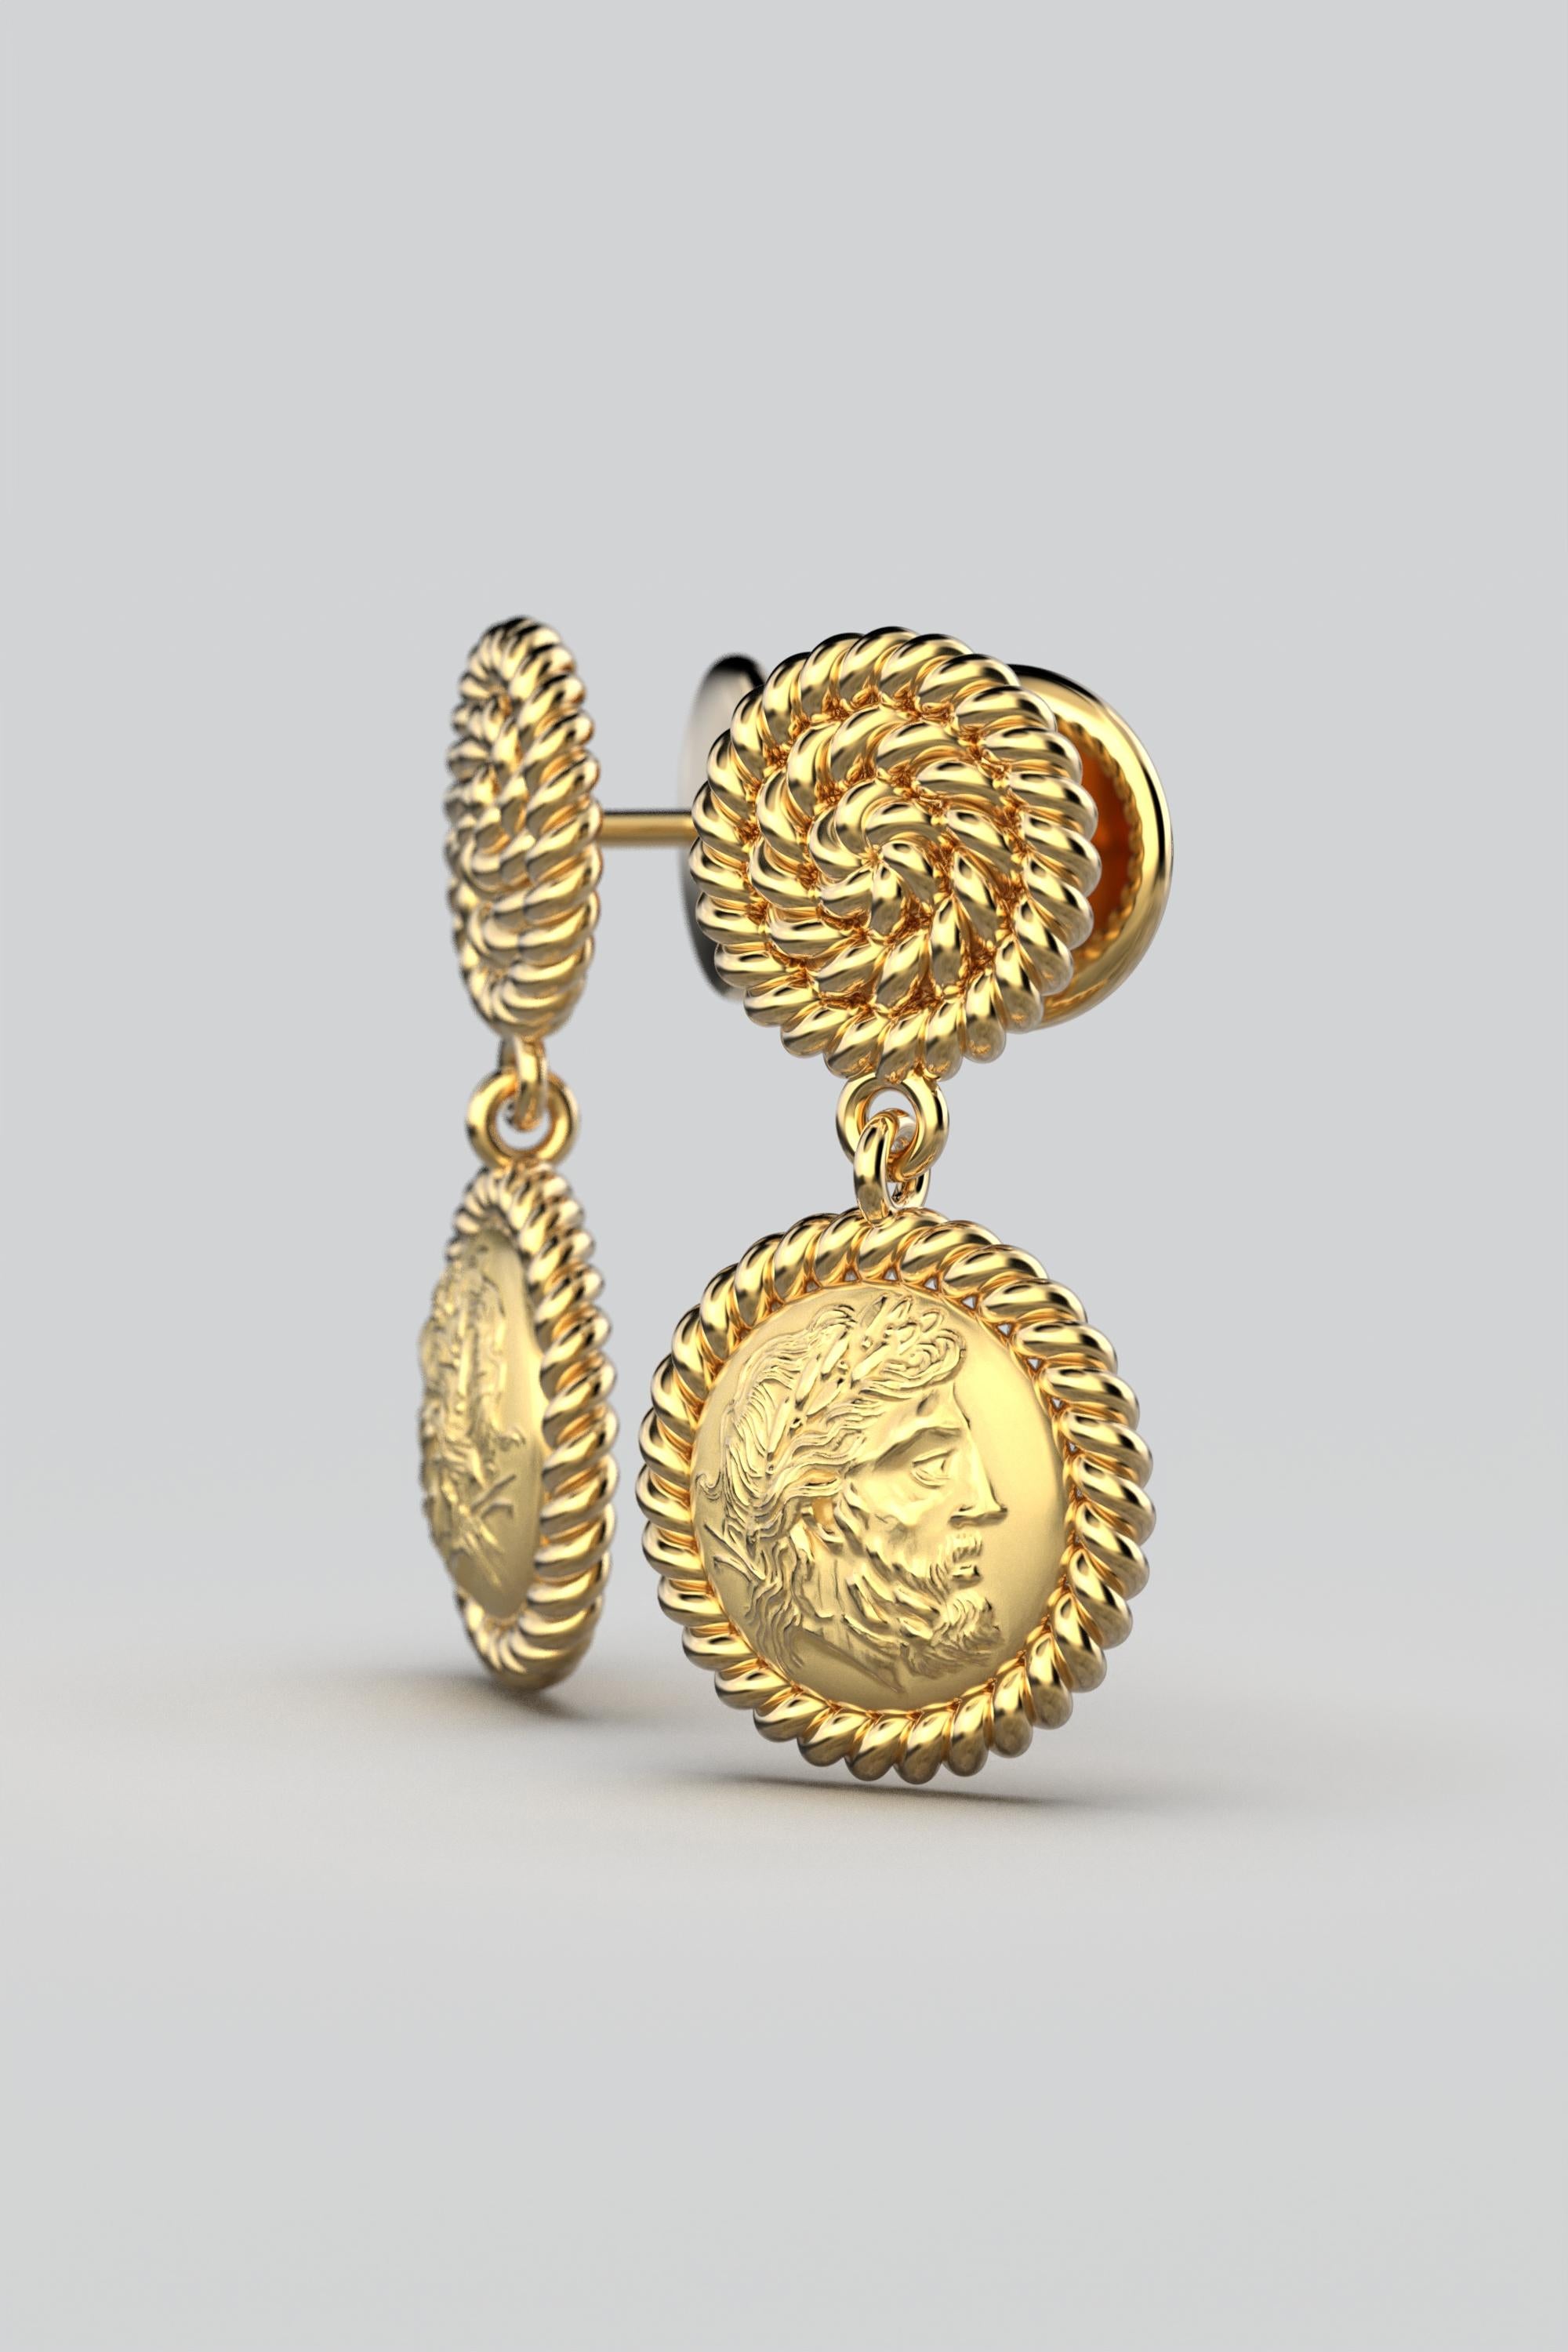 Greek Revival Dangle Earrings in 18k solid Gold, Ancient Greek Style, Zeus Coin Earrings For Sale